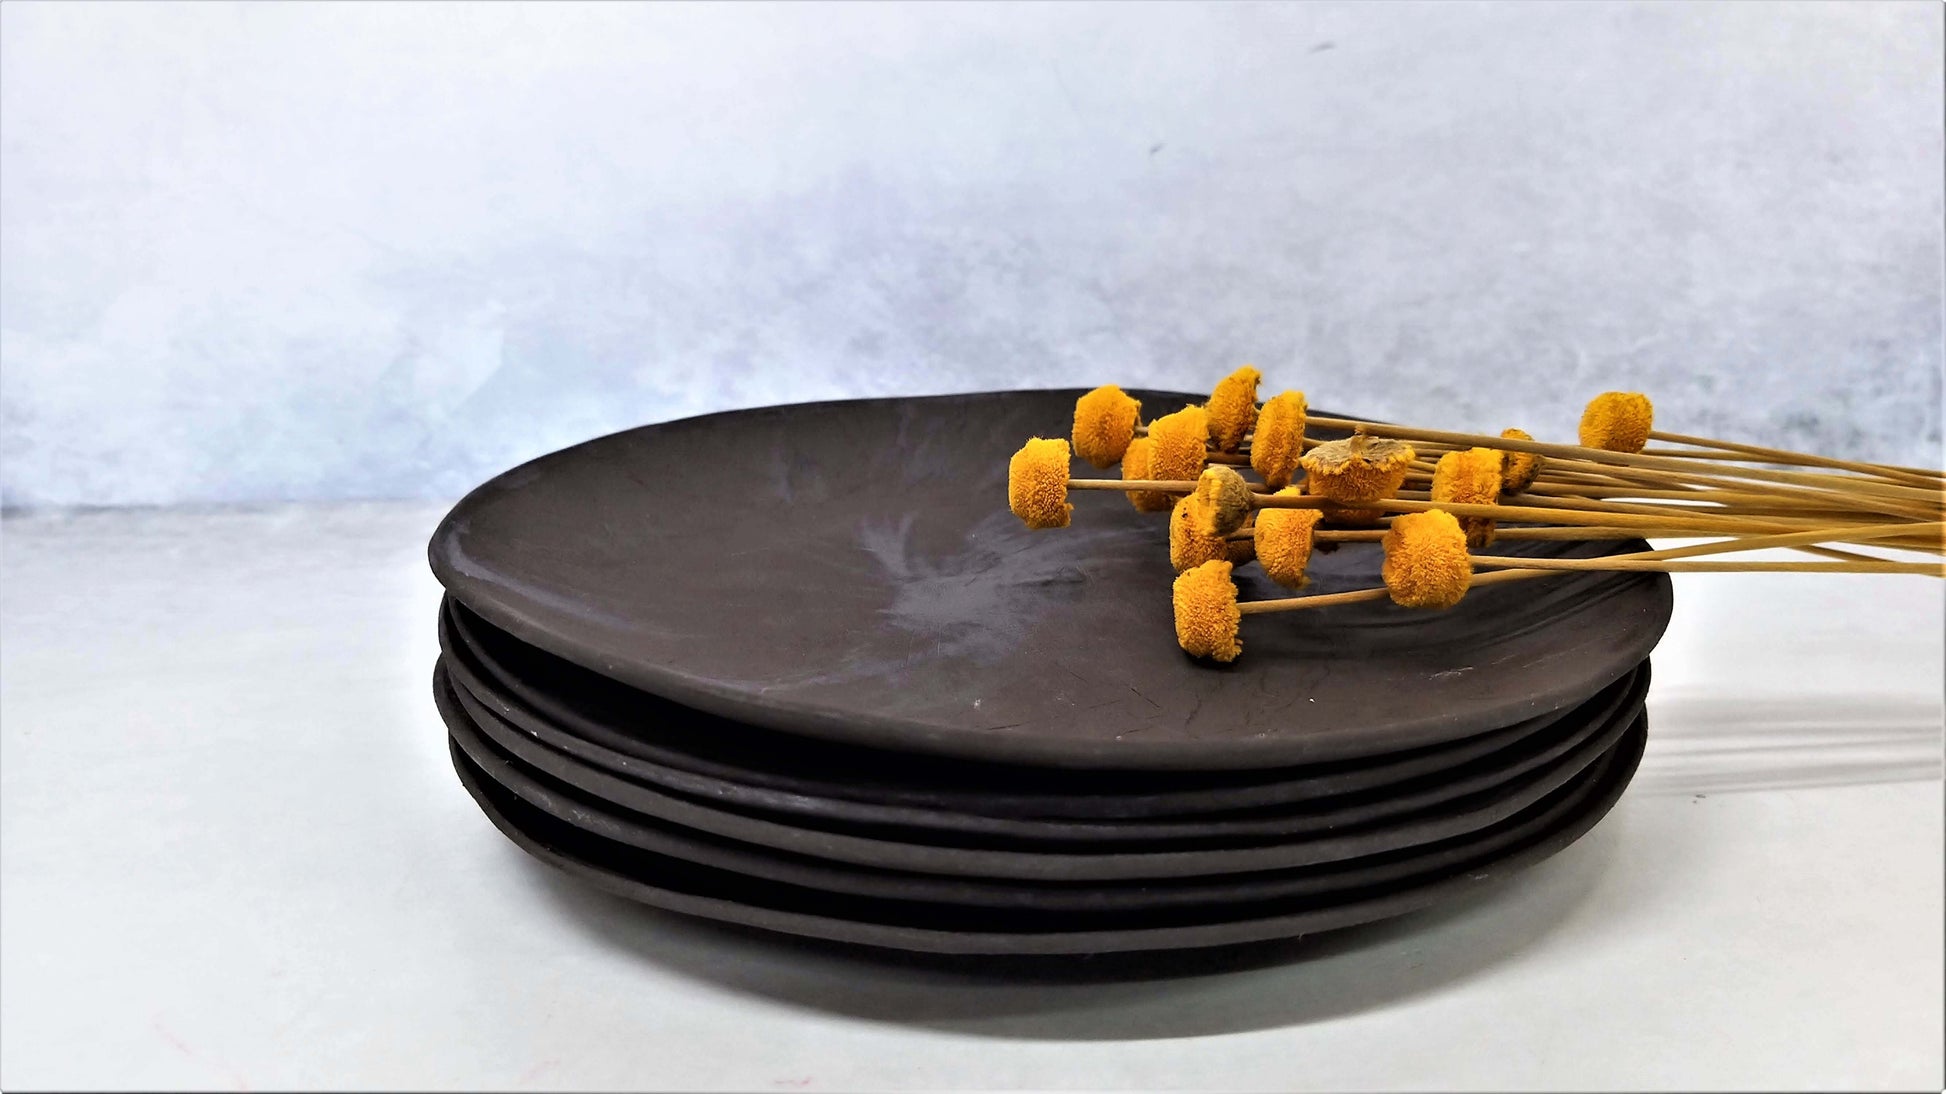 Black Dish Set, Unique Black Plate Set for 1-12, Black Ceramic Dinner Plates,  Black Dinnerware, Handmade Pottery Plates 